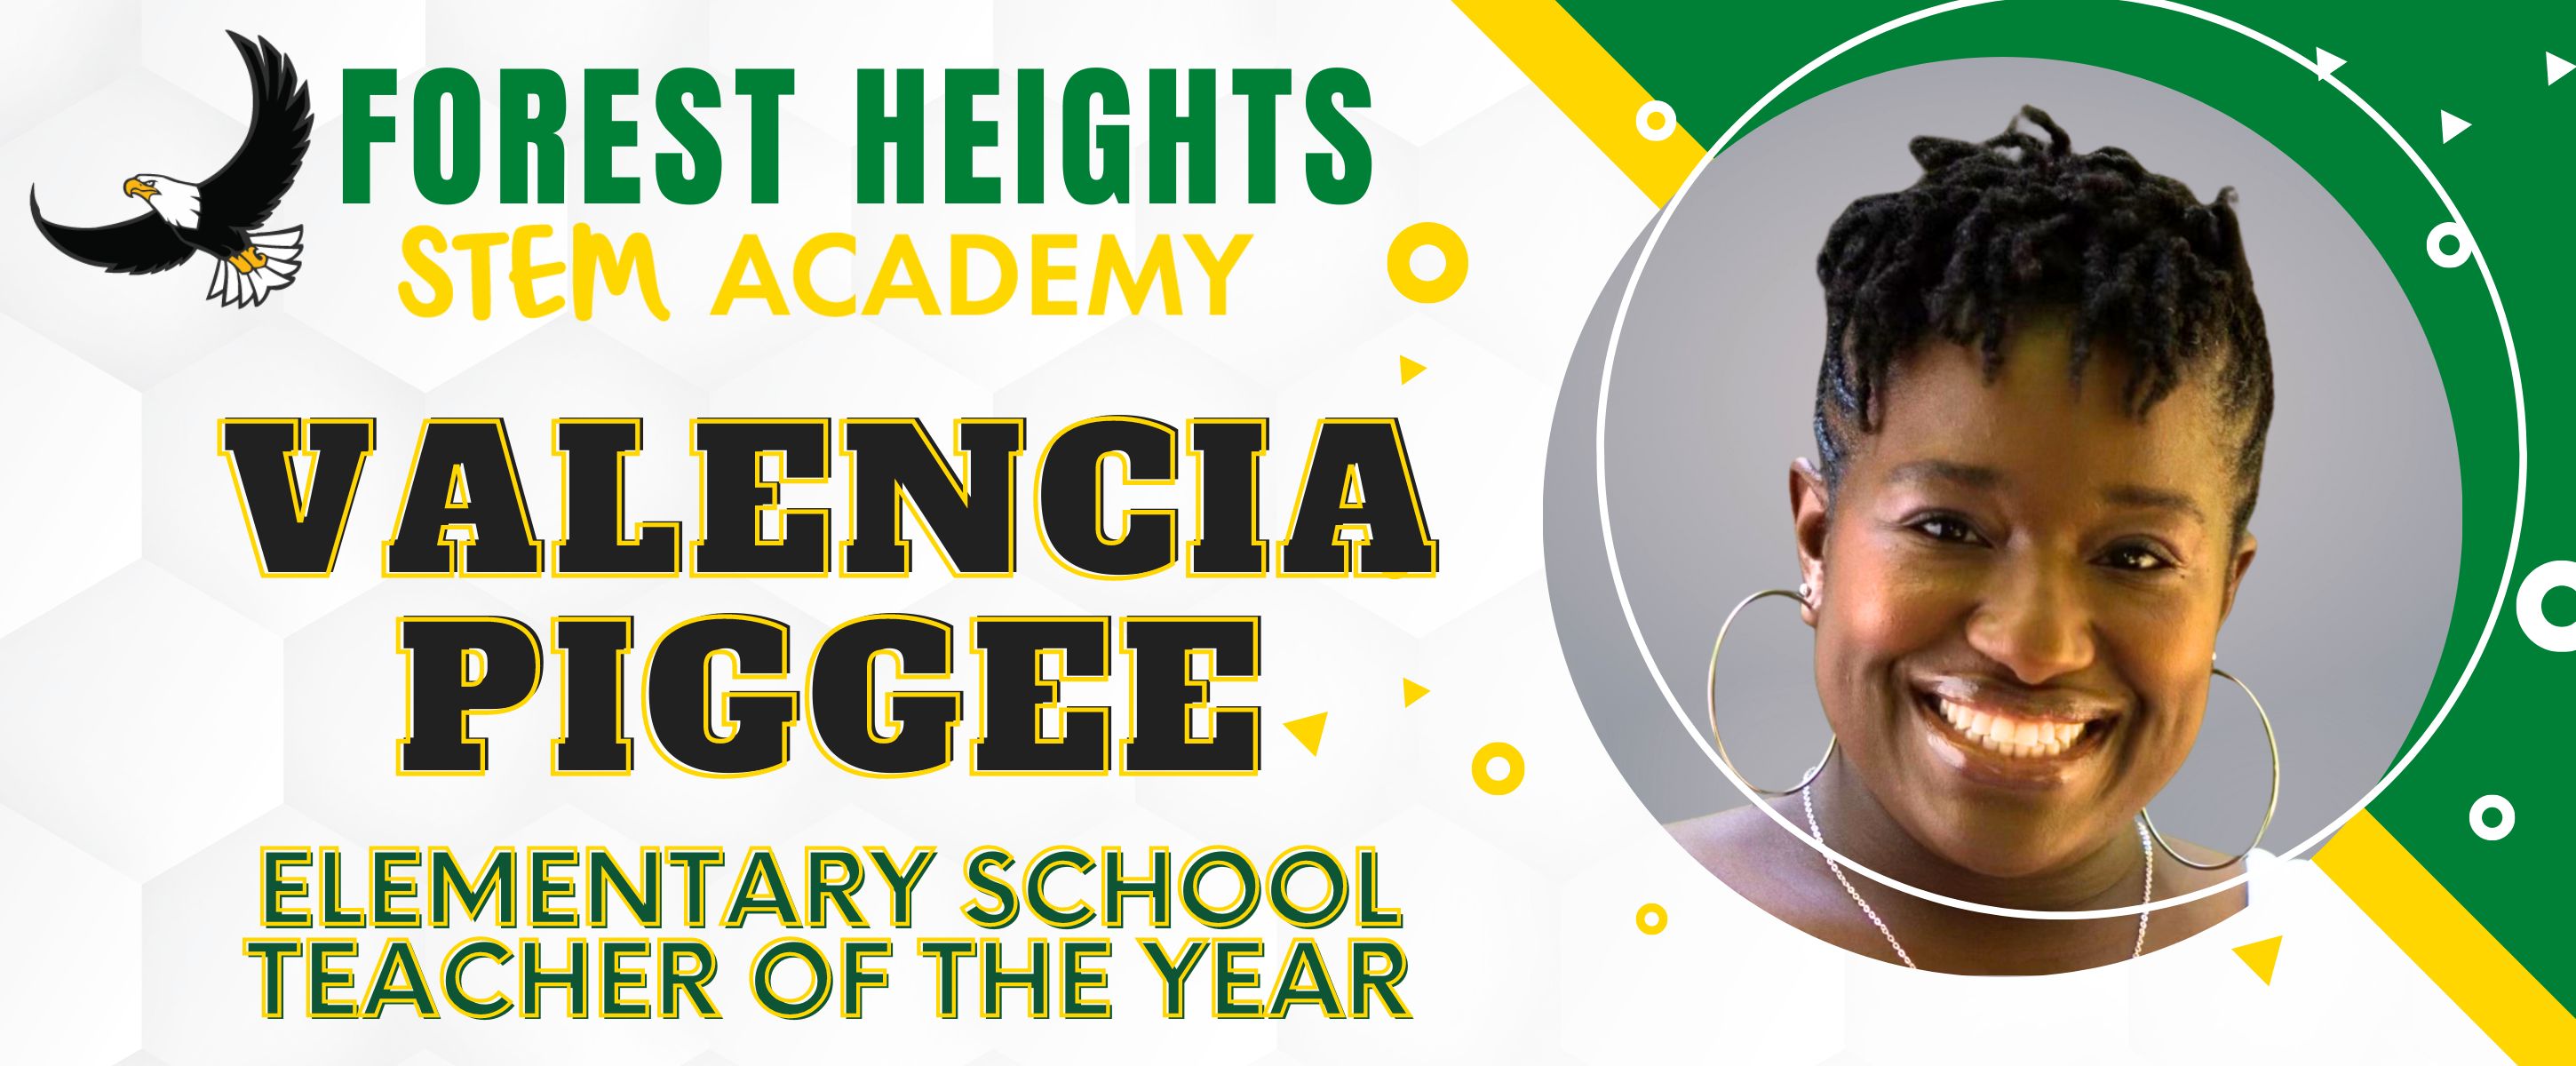 Elementary Teacher of the Year-Valencia Piggee